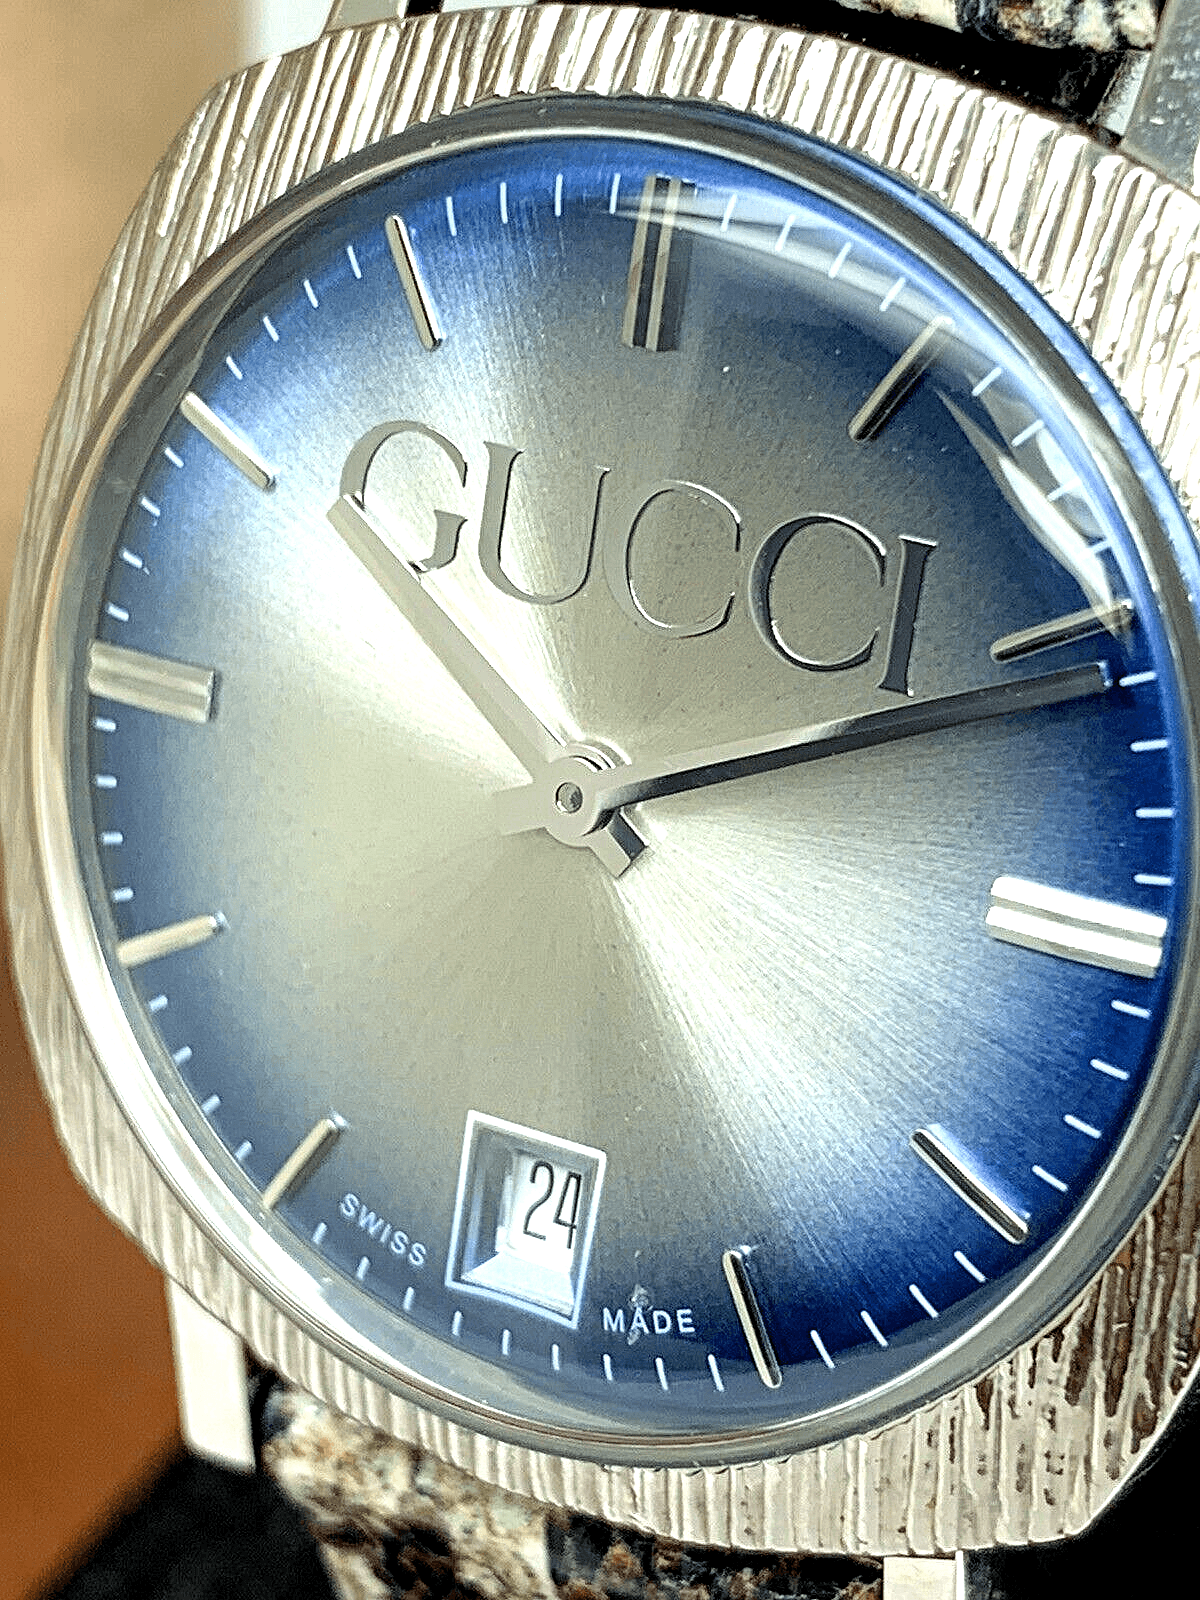 Gucci Grip Blue Dial Brown Leather Strap Unisex Watch - YA152401